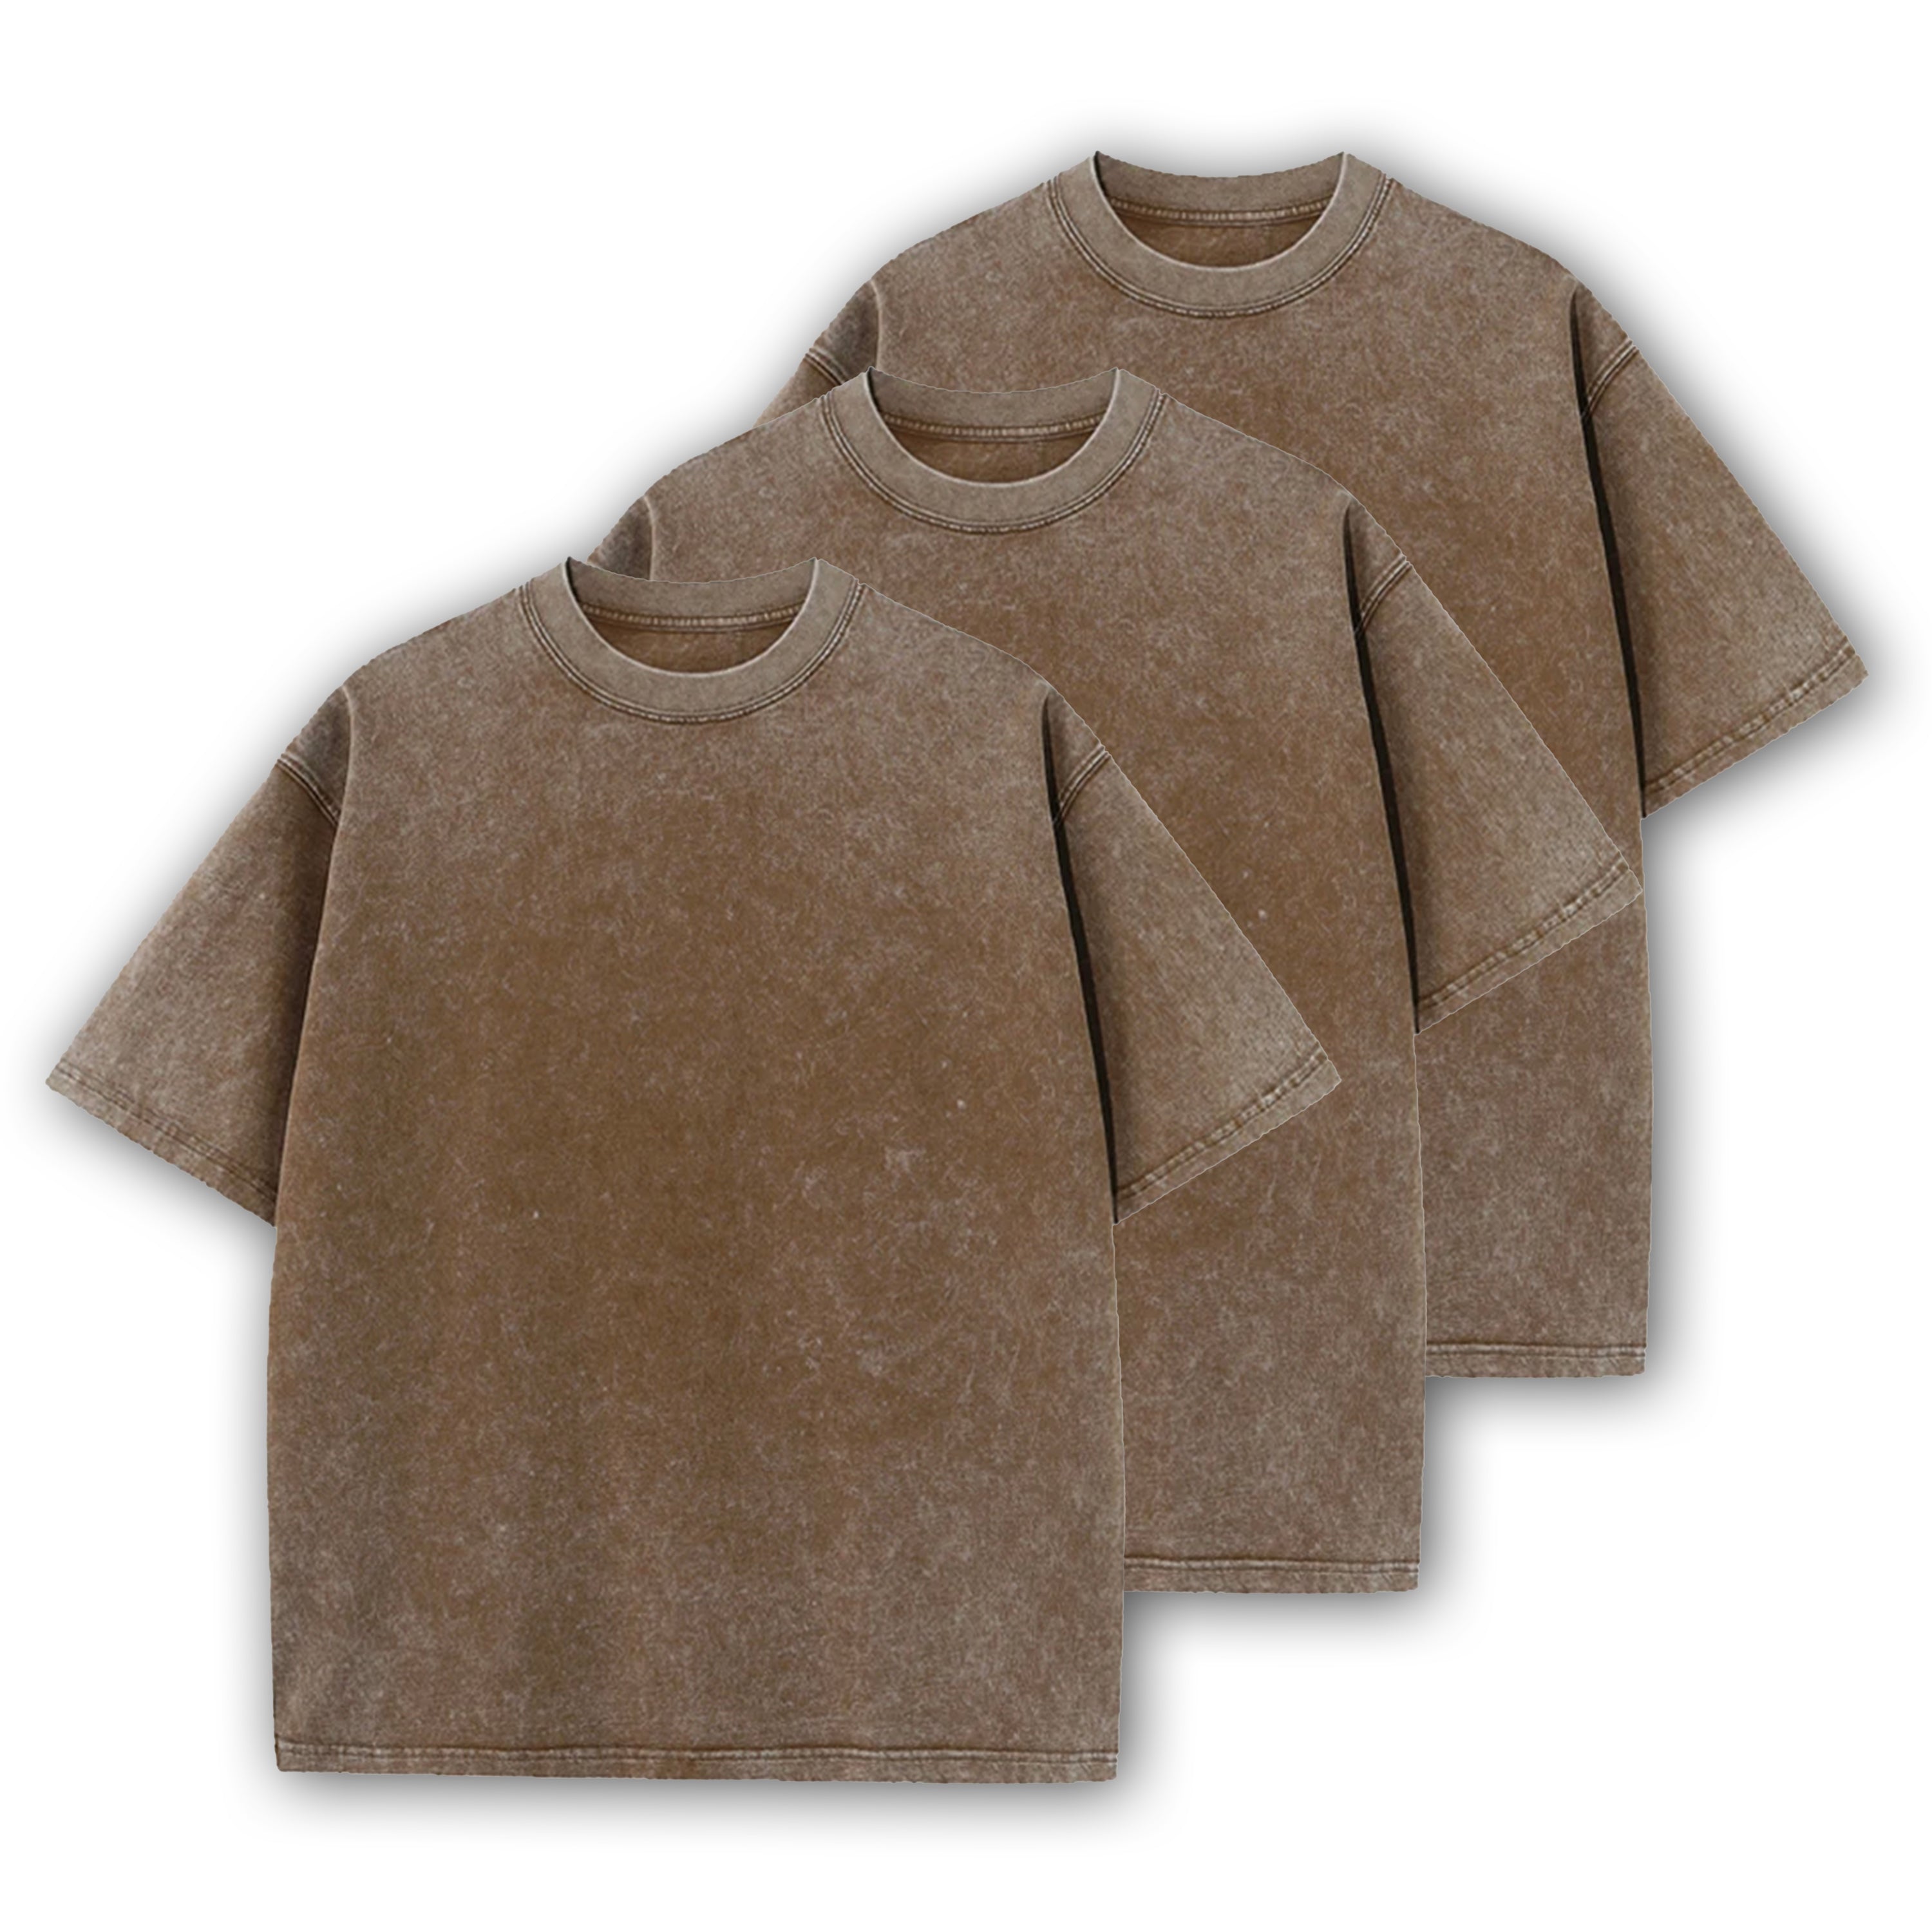 3 Pack - Heavyweight Stone Washed T-Shirts